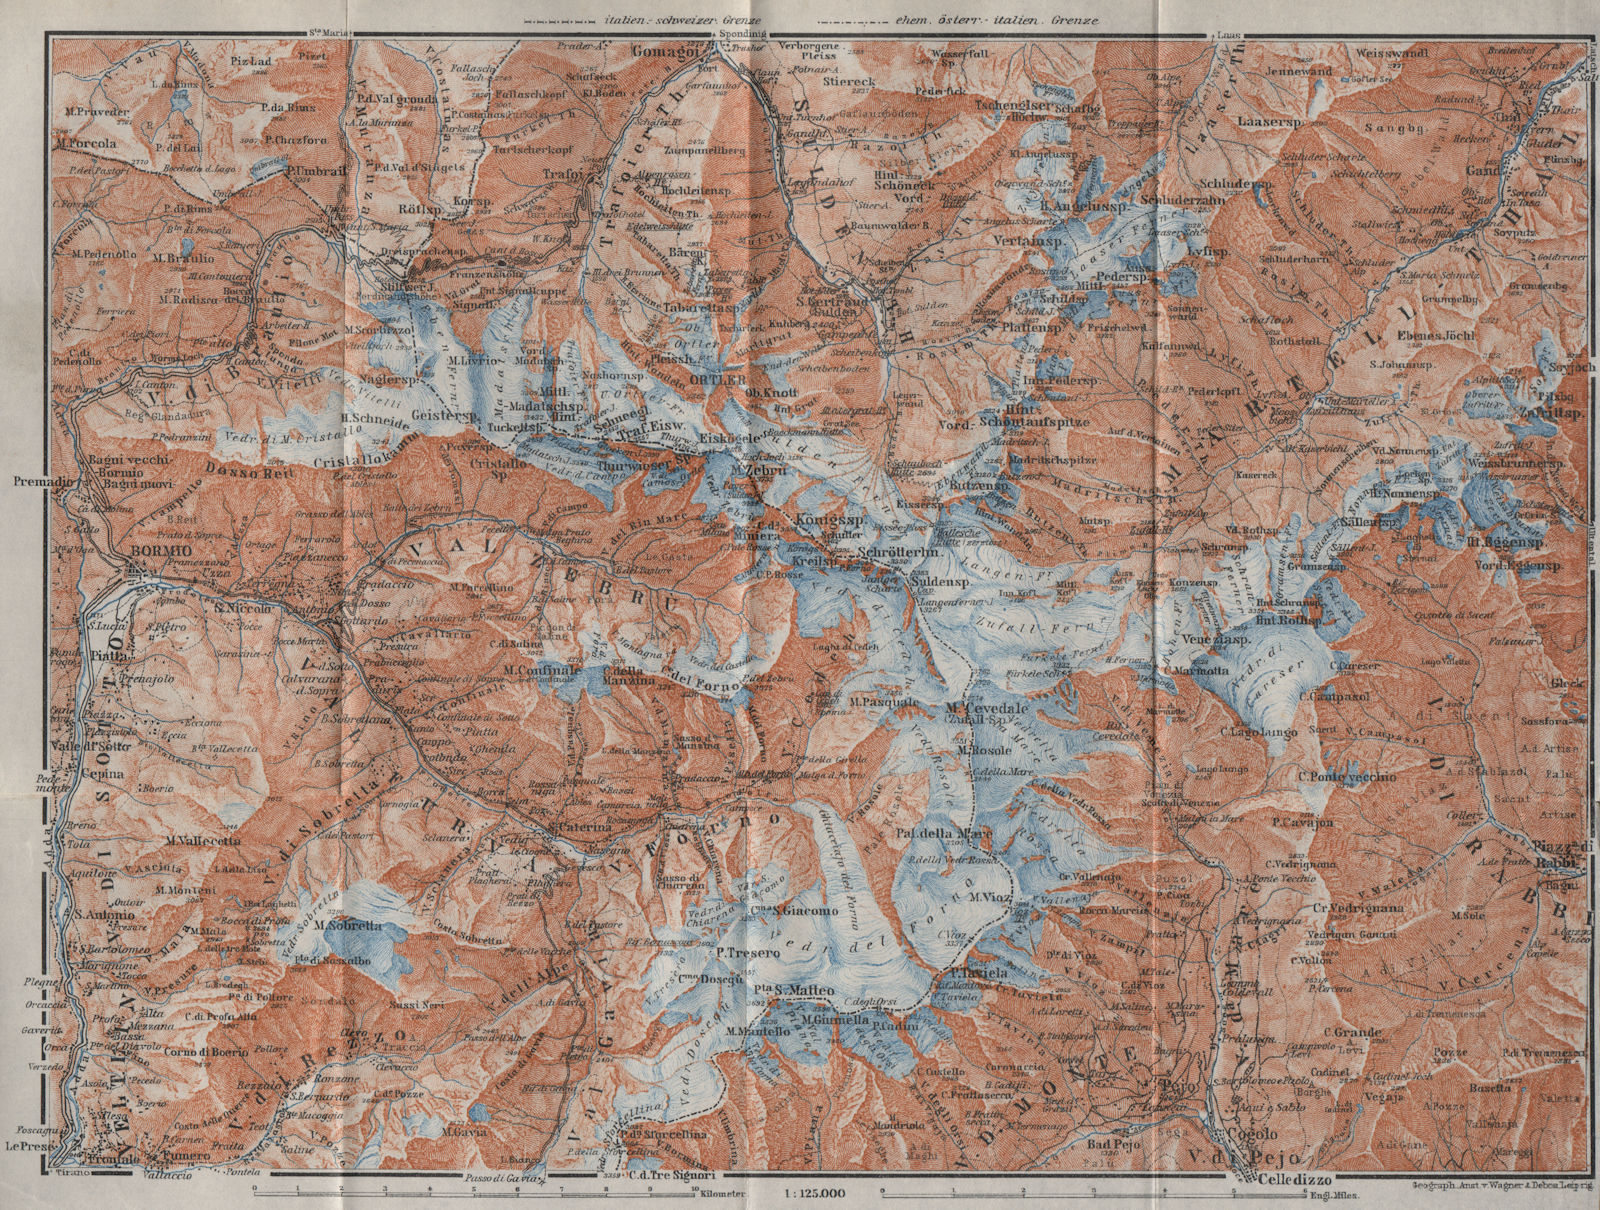 ORTLER ALPS. Ortler Alpen Ortles-Cevedale Bormio Solda Santa Caterina 1923 map